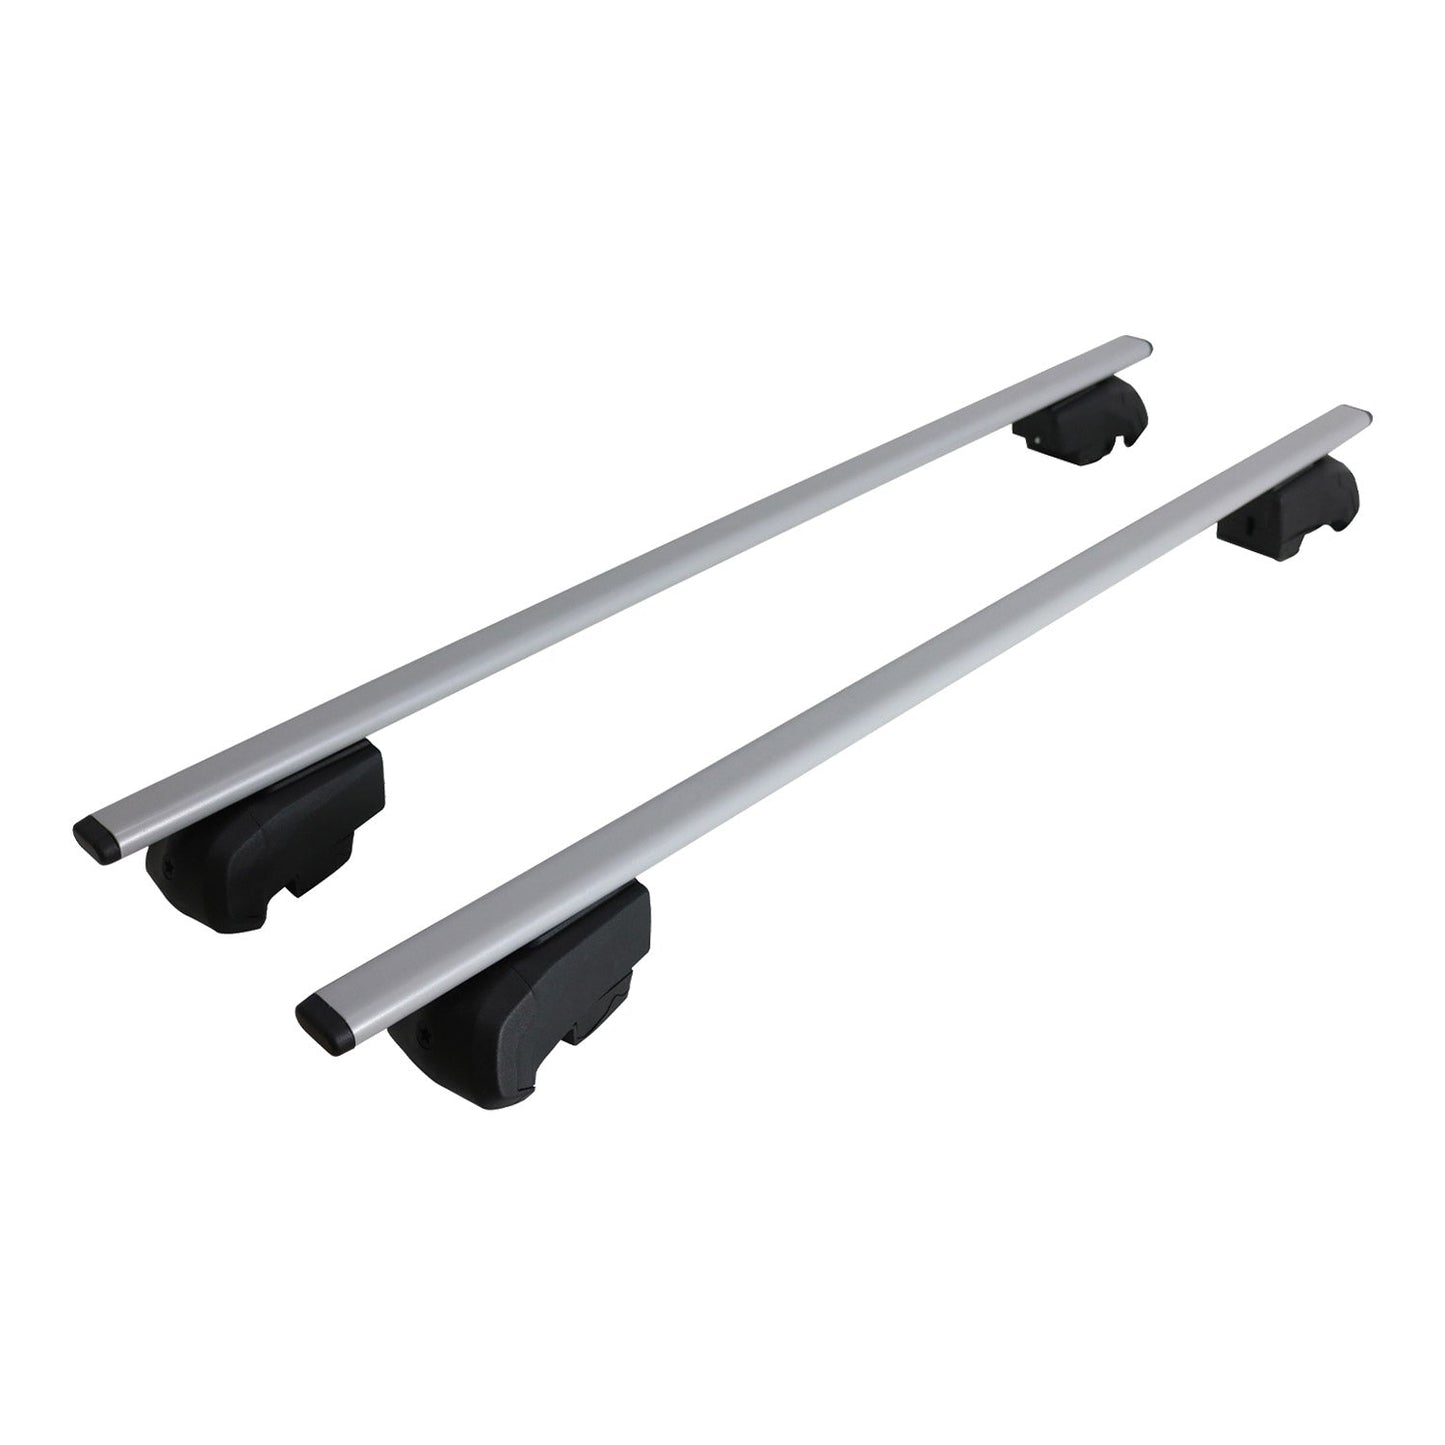 OMAC Roof Racks Luggage Cross Bars Iron for Mercedes GLC Class X254 2023-2024 Gray G003081